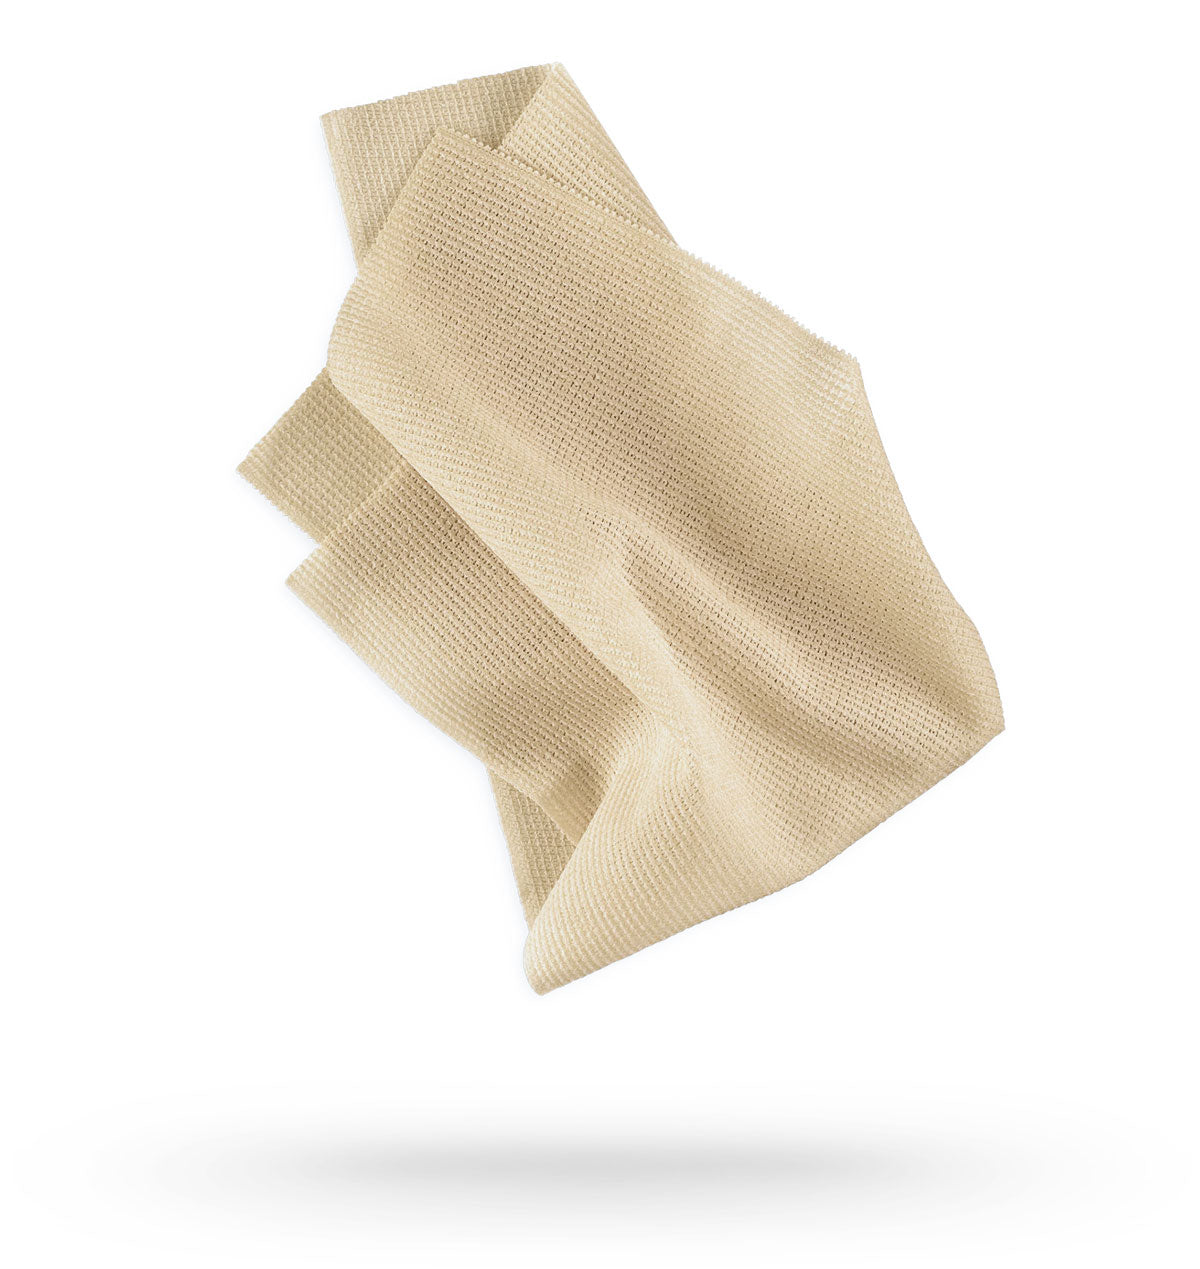 Gamma Tacky Towel (Grip Enhancer)